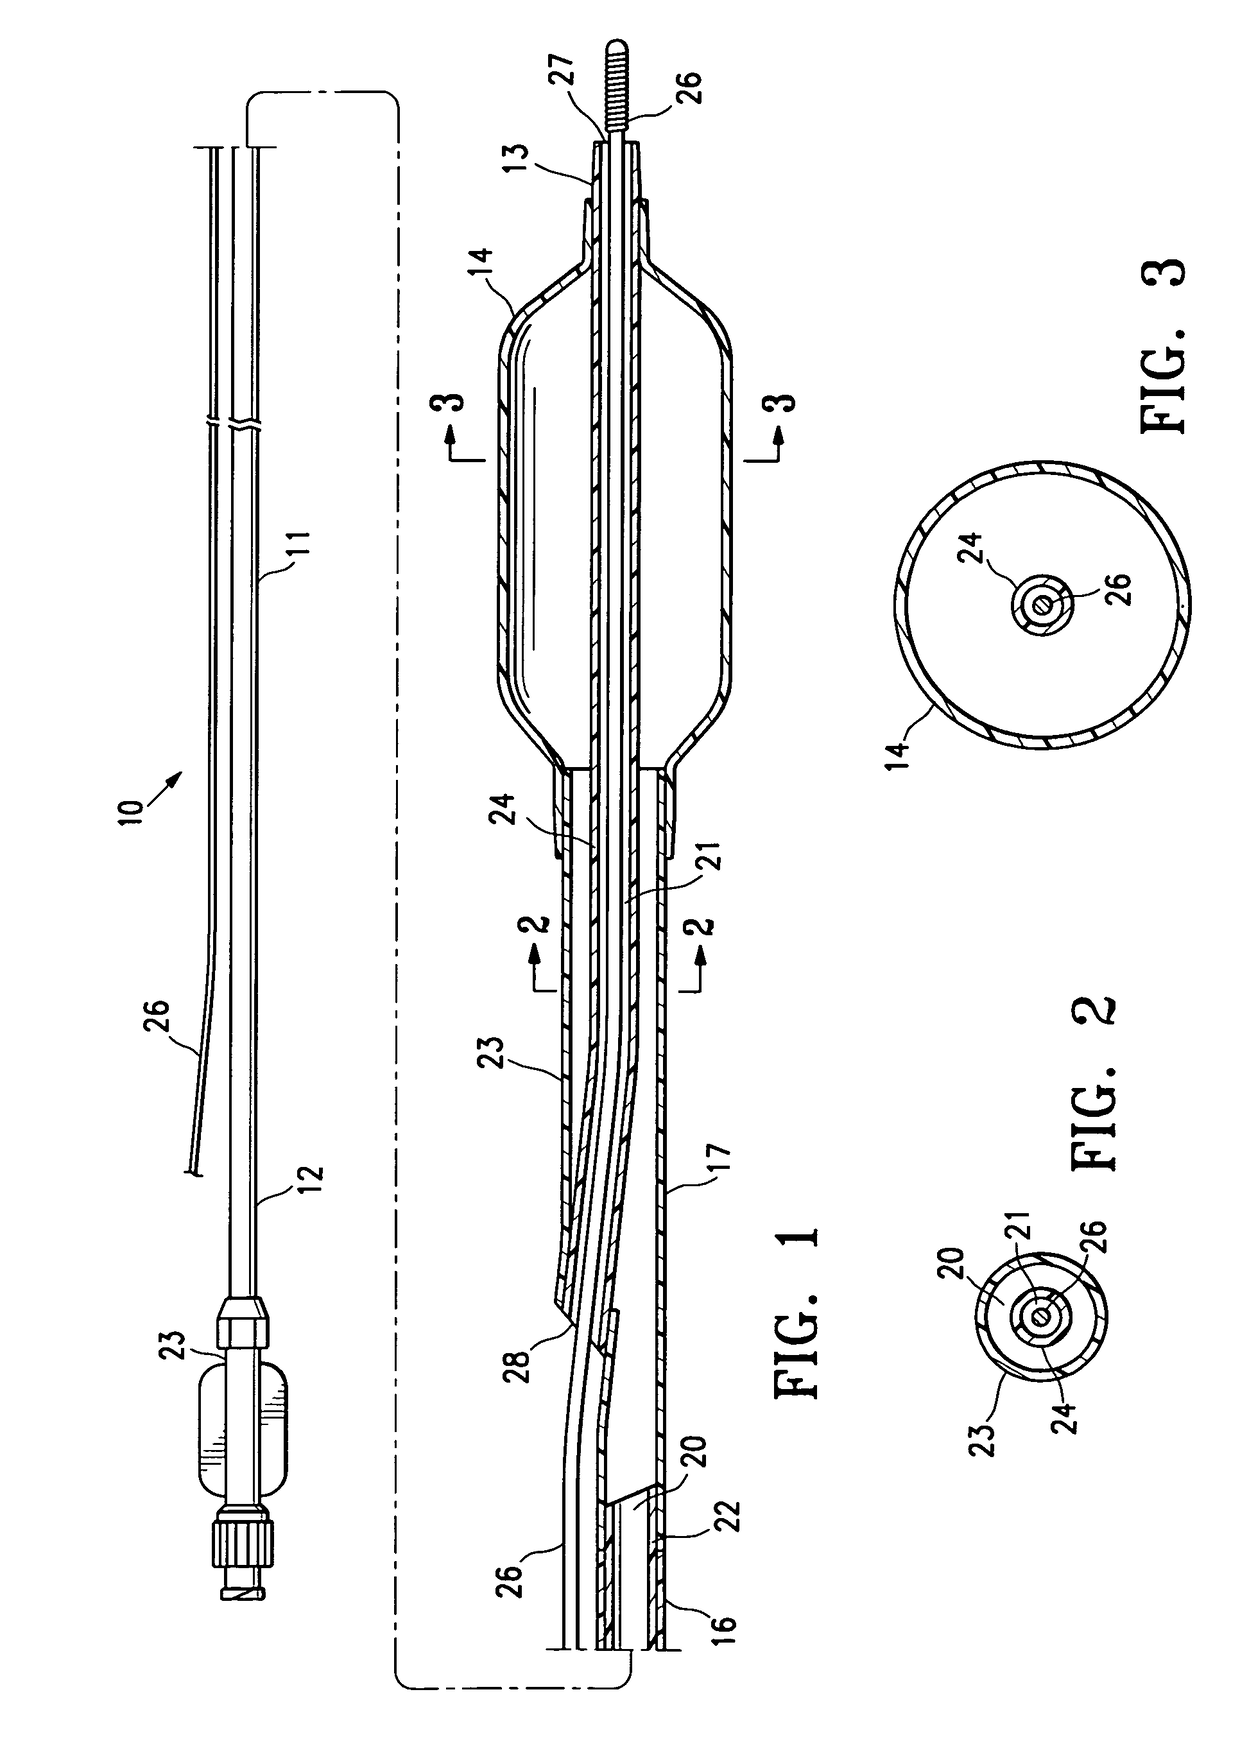 Method of making a balloon catheter shaft having high strength and flexibility